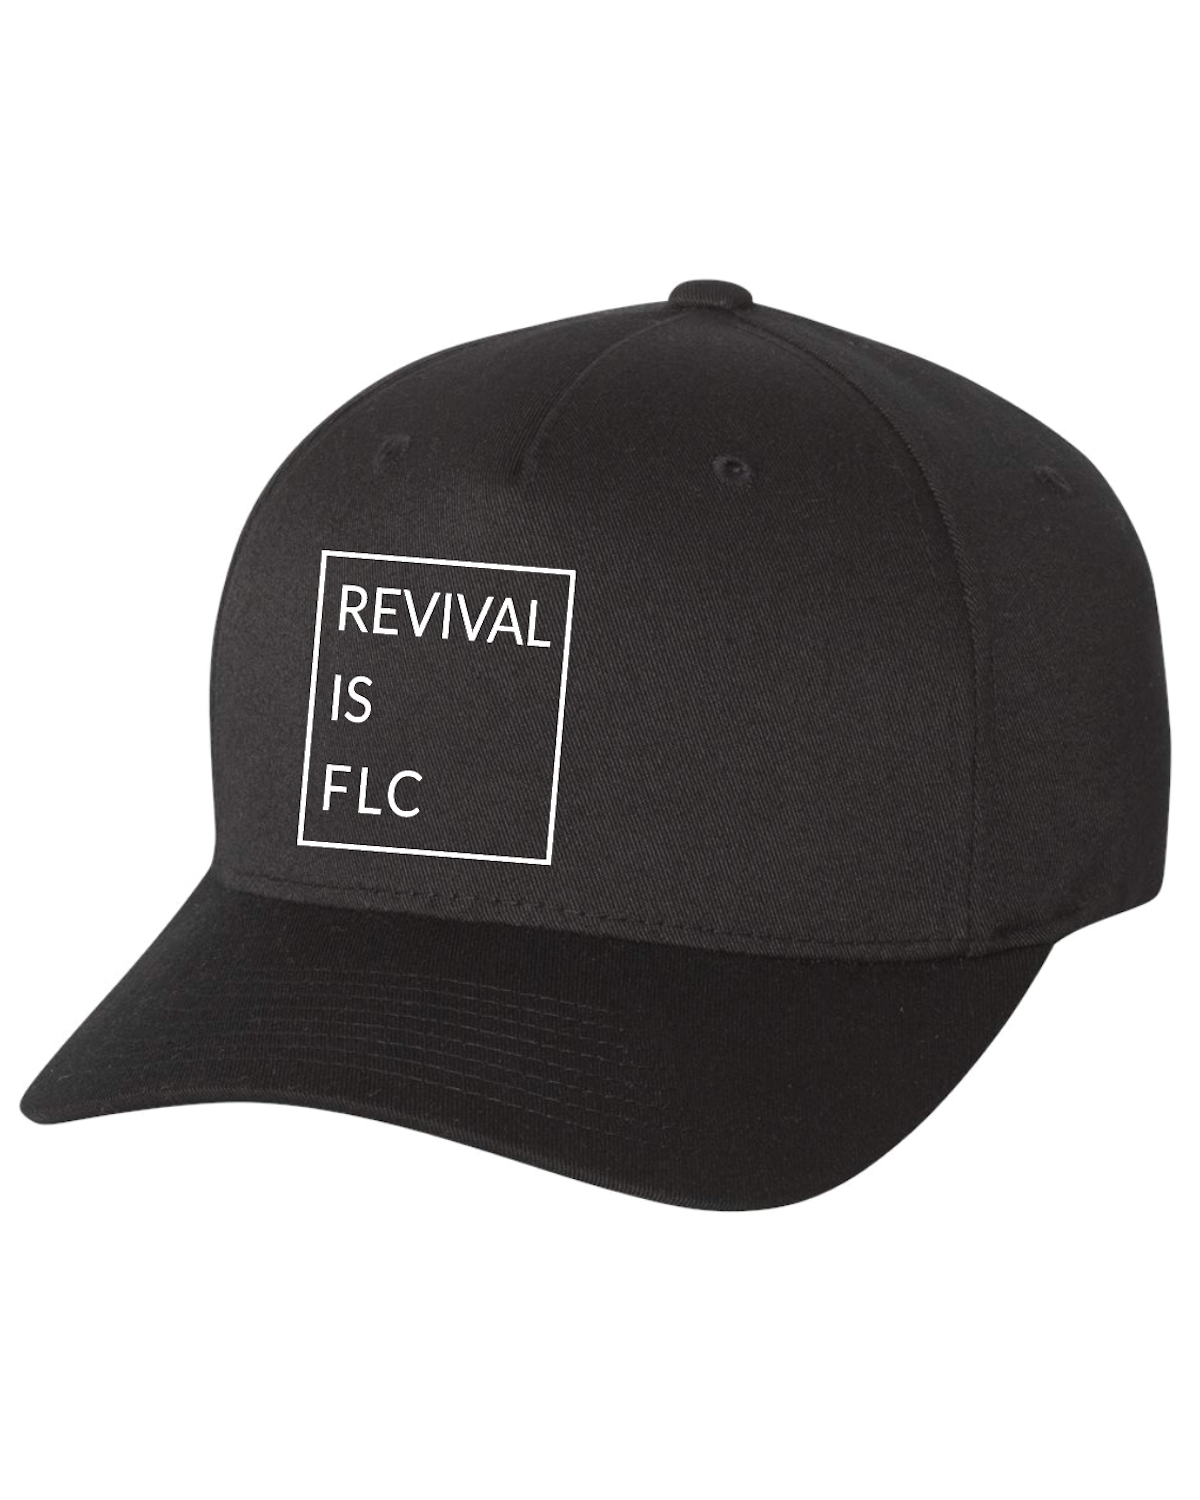 REVIVAL IS FLC Flex-fit Cap